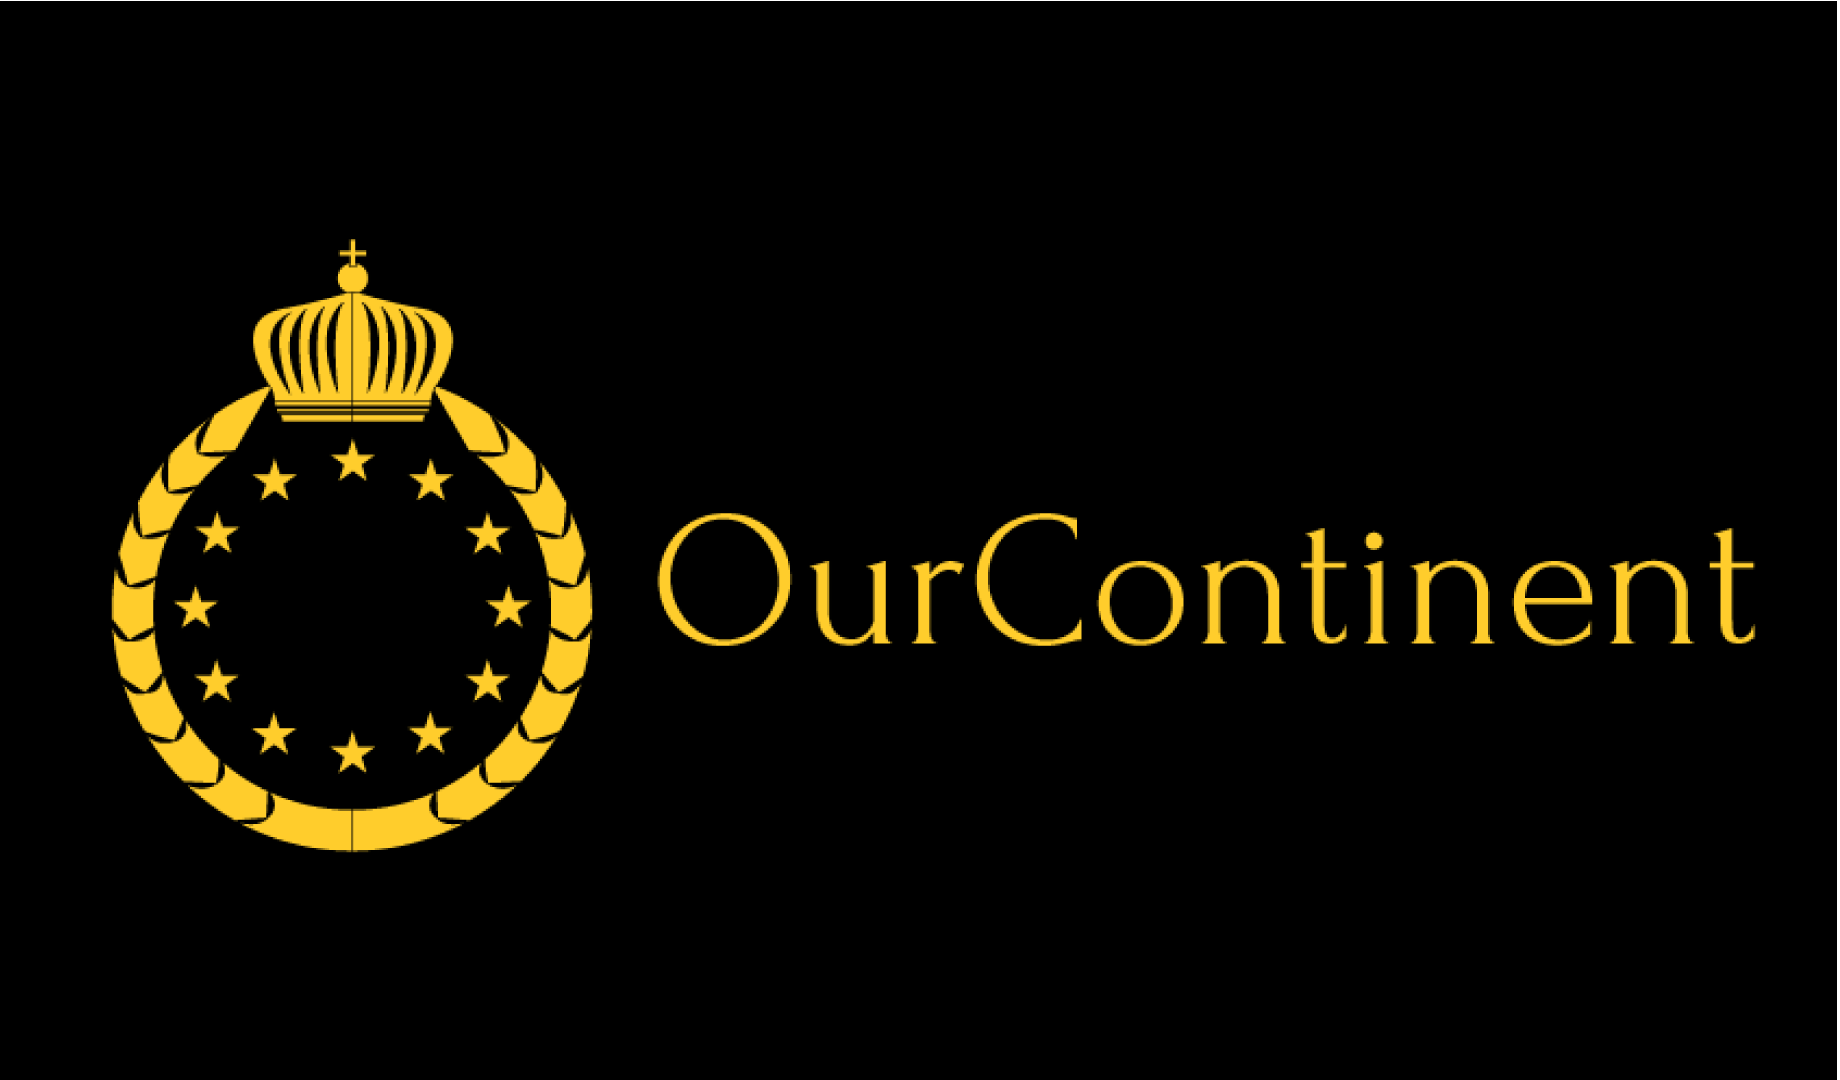 pan-european movement ourcontinent european civilization